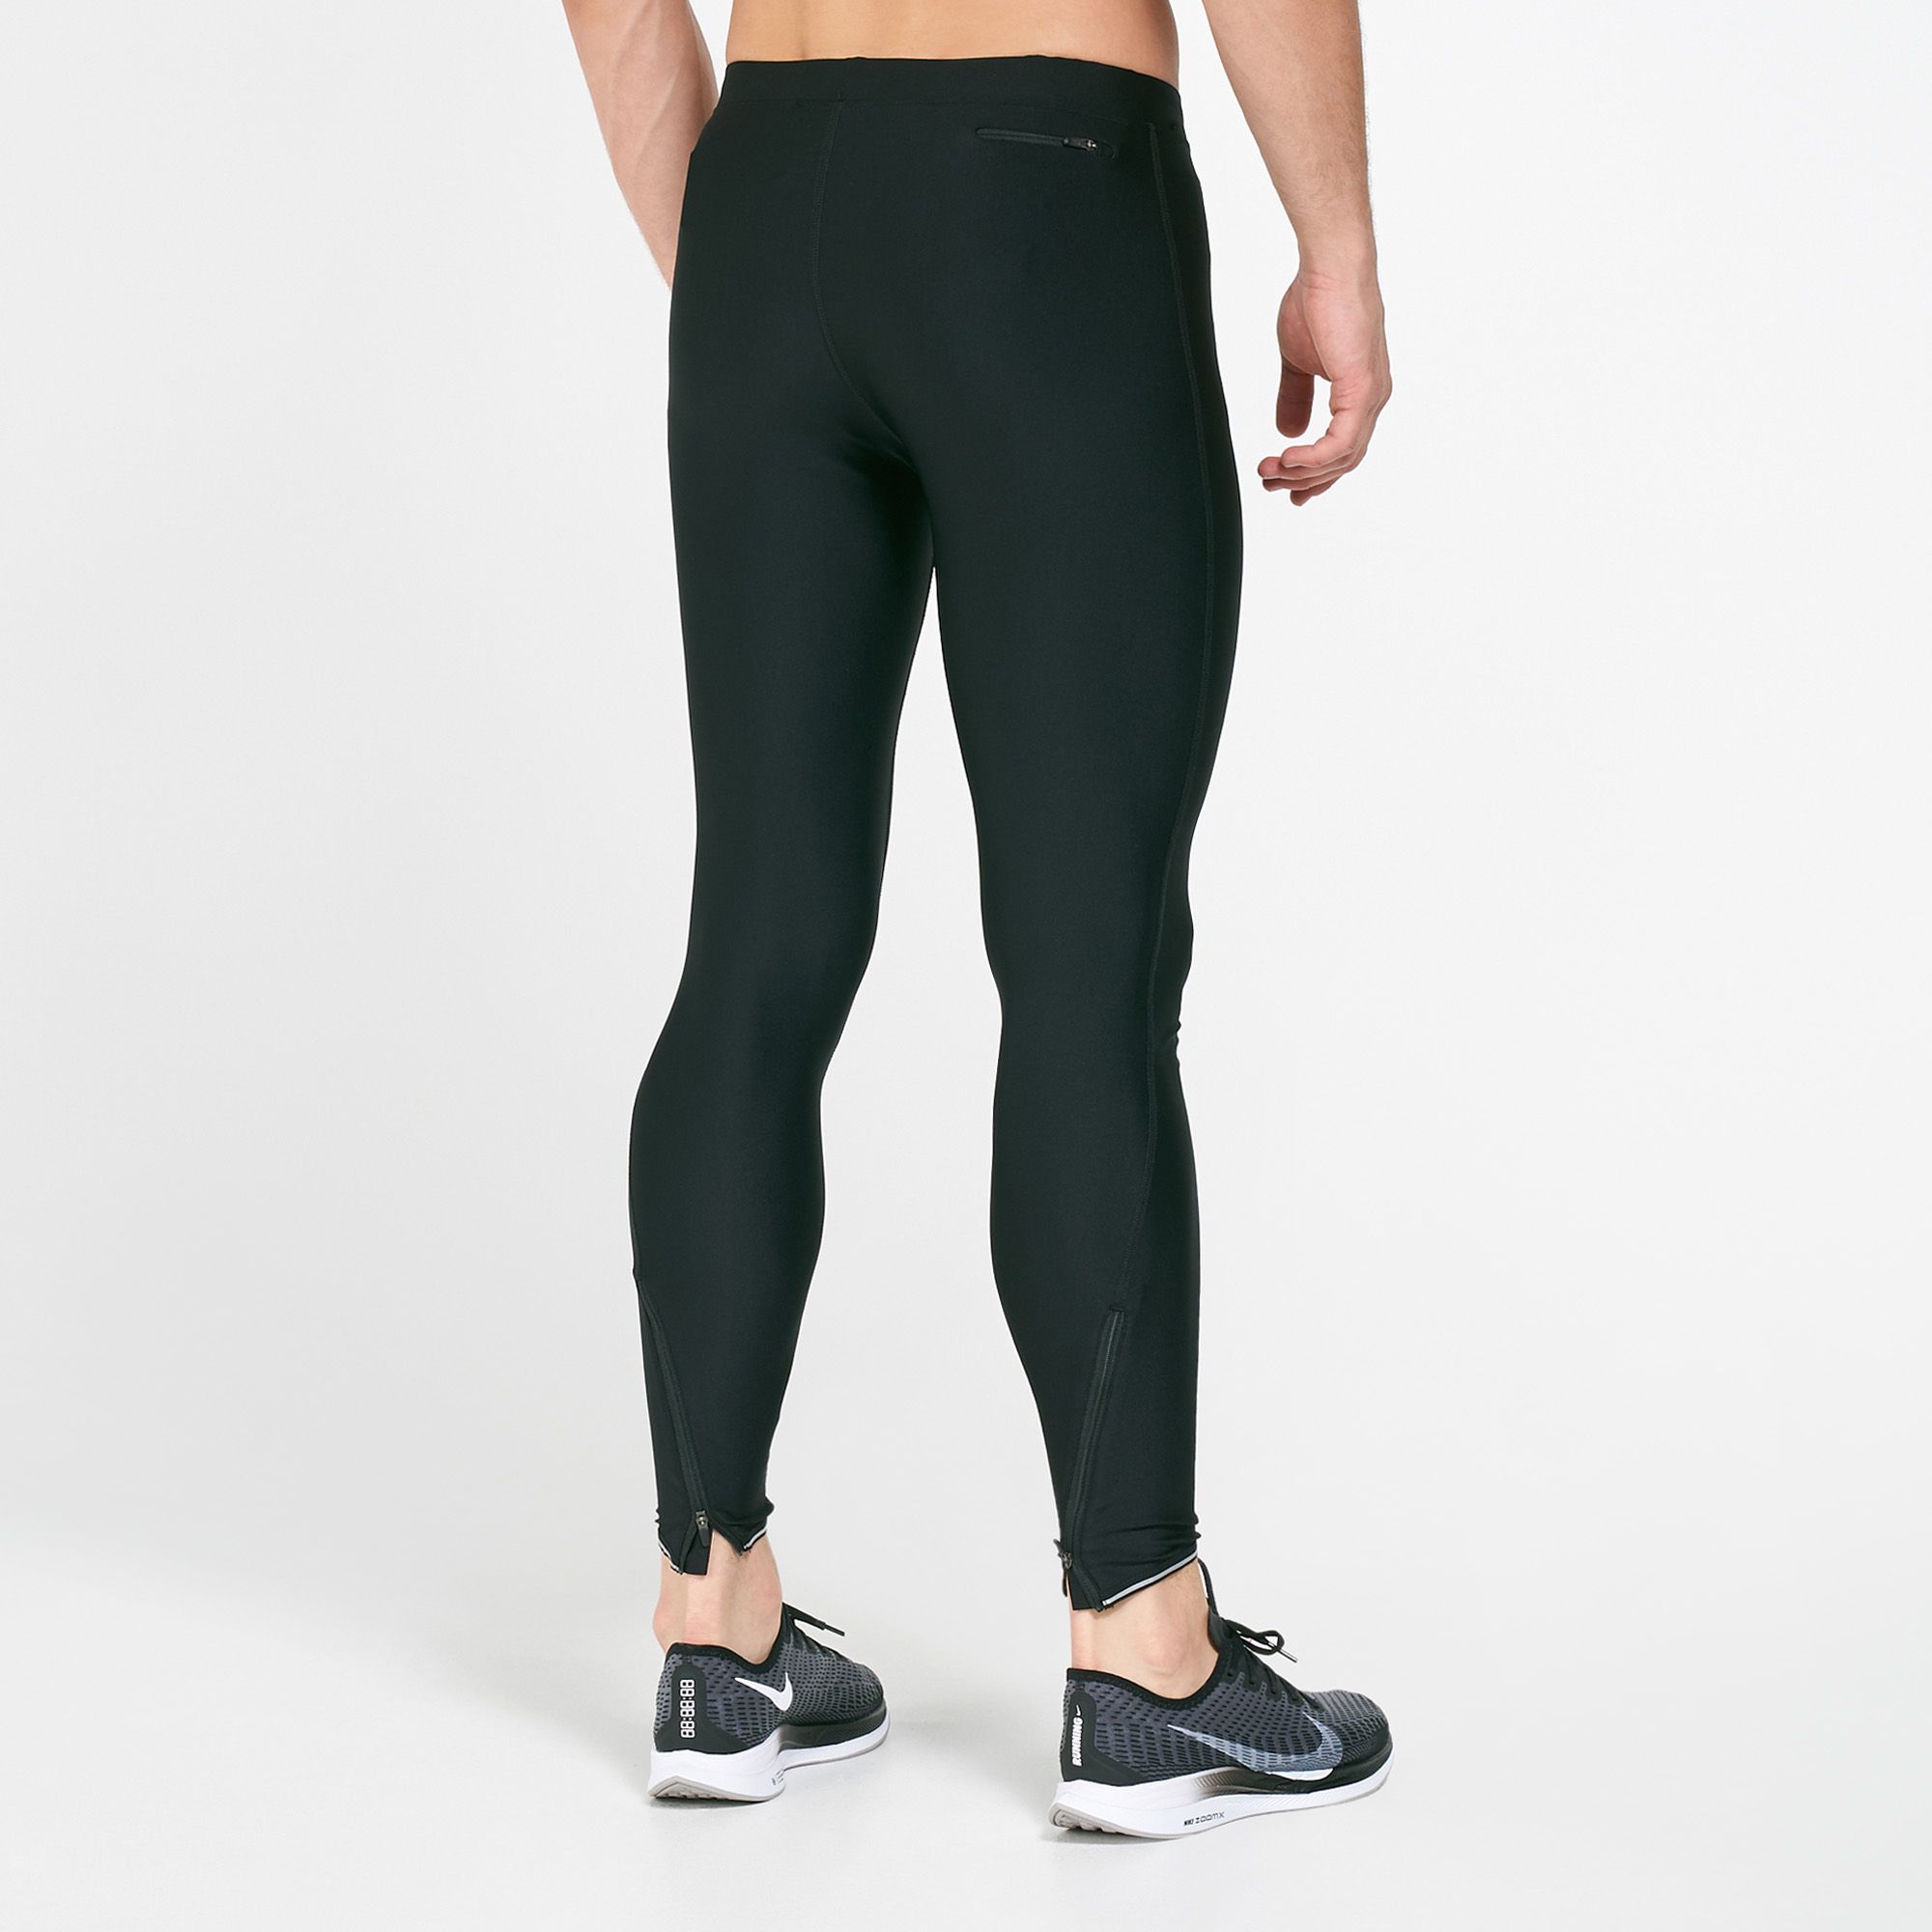 Nike Men's Mobilility Running Tights | Tights | Pants | Clothing | Mens ...